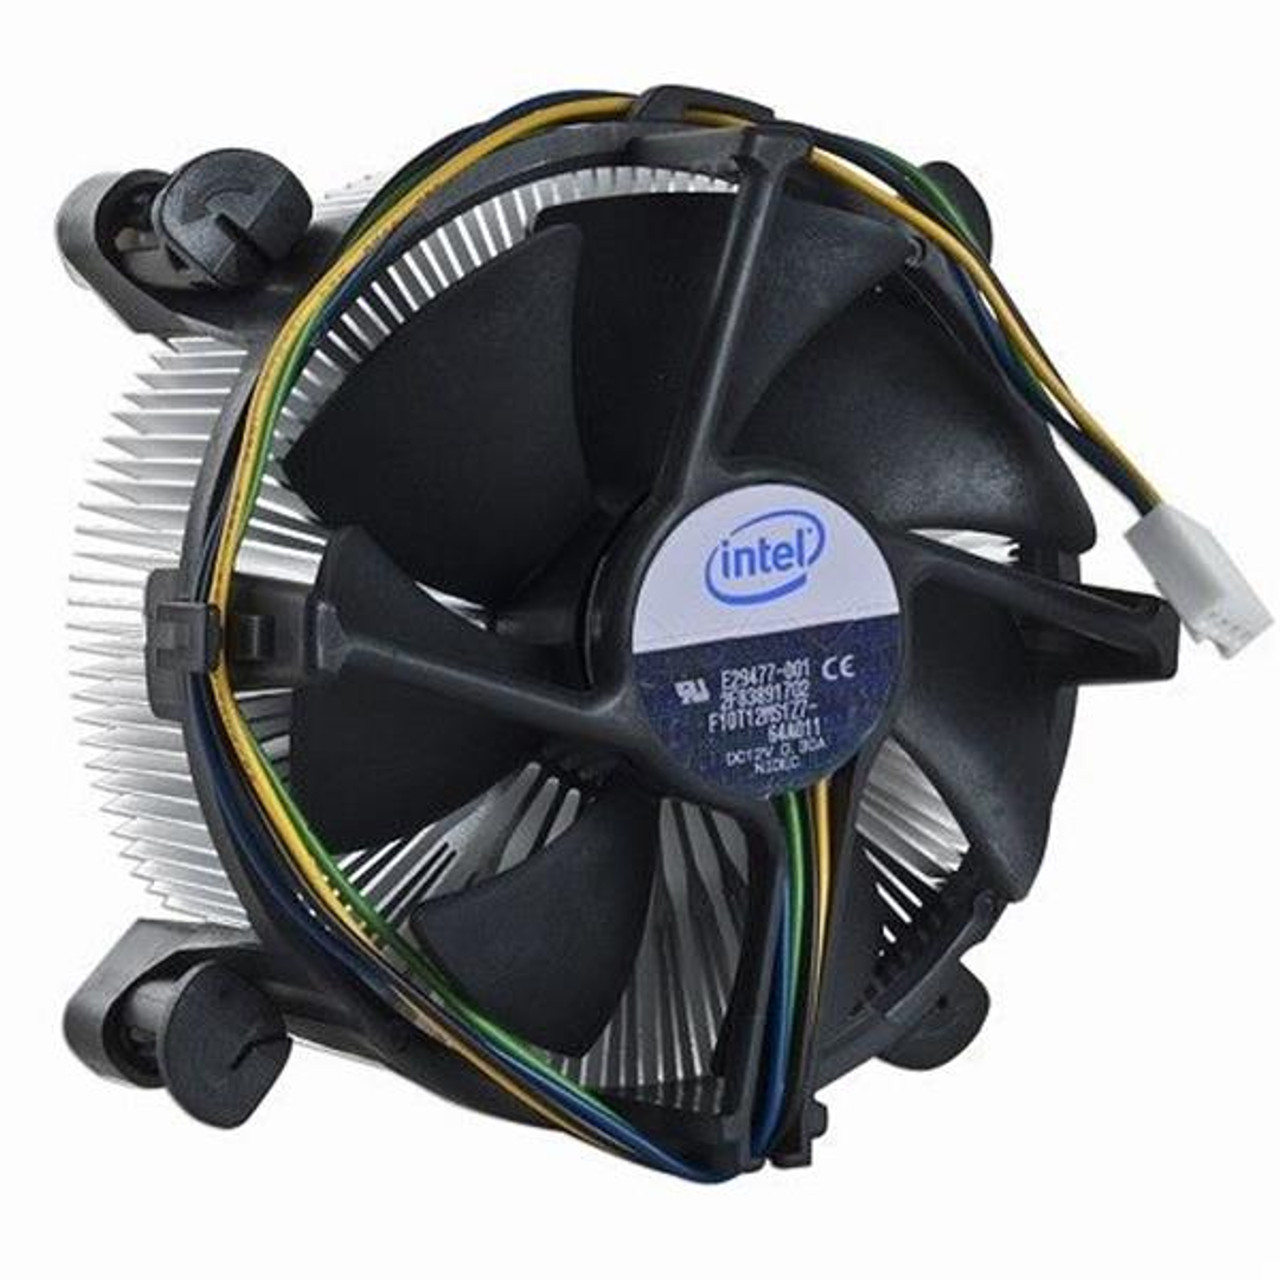 E29477-001 Intel Socket LGA1366 Fan and Heatsink for Xeon/Core i7 Series